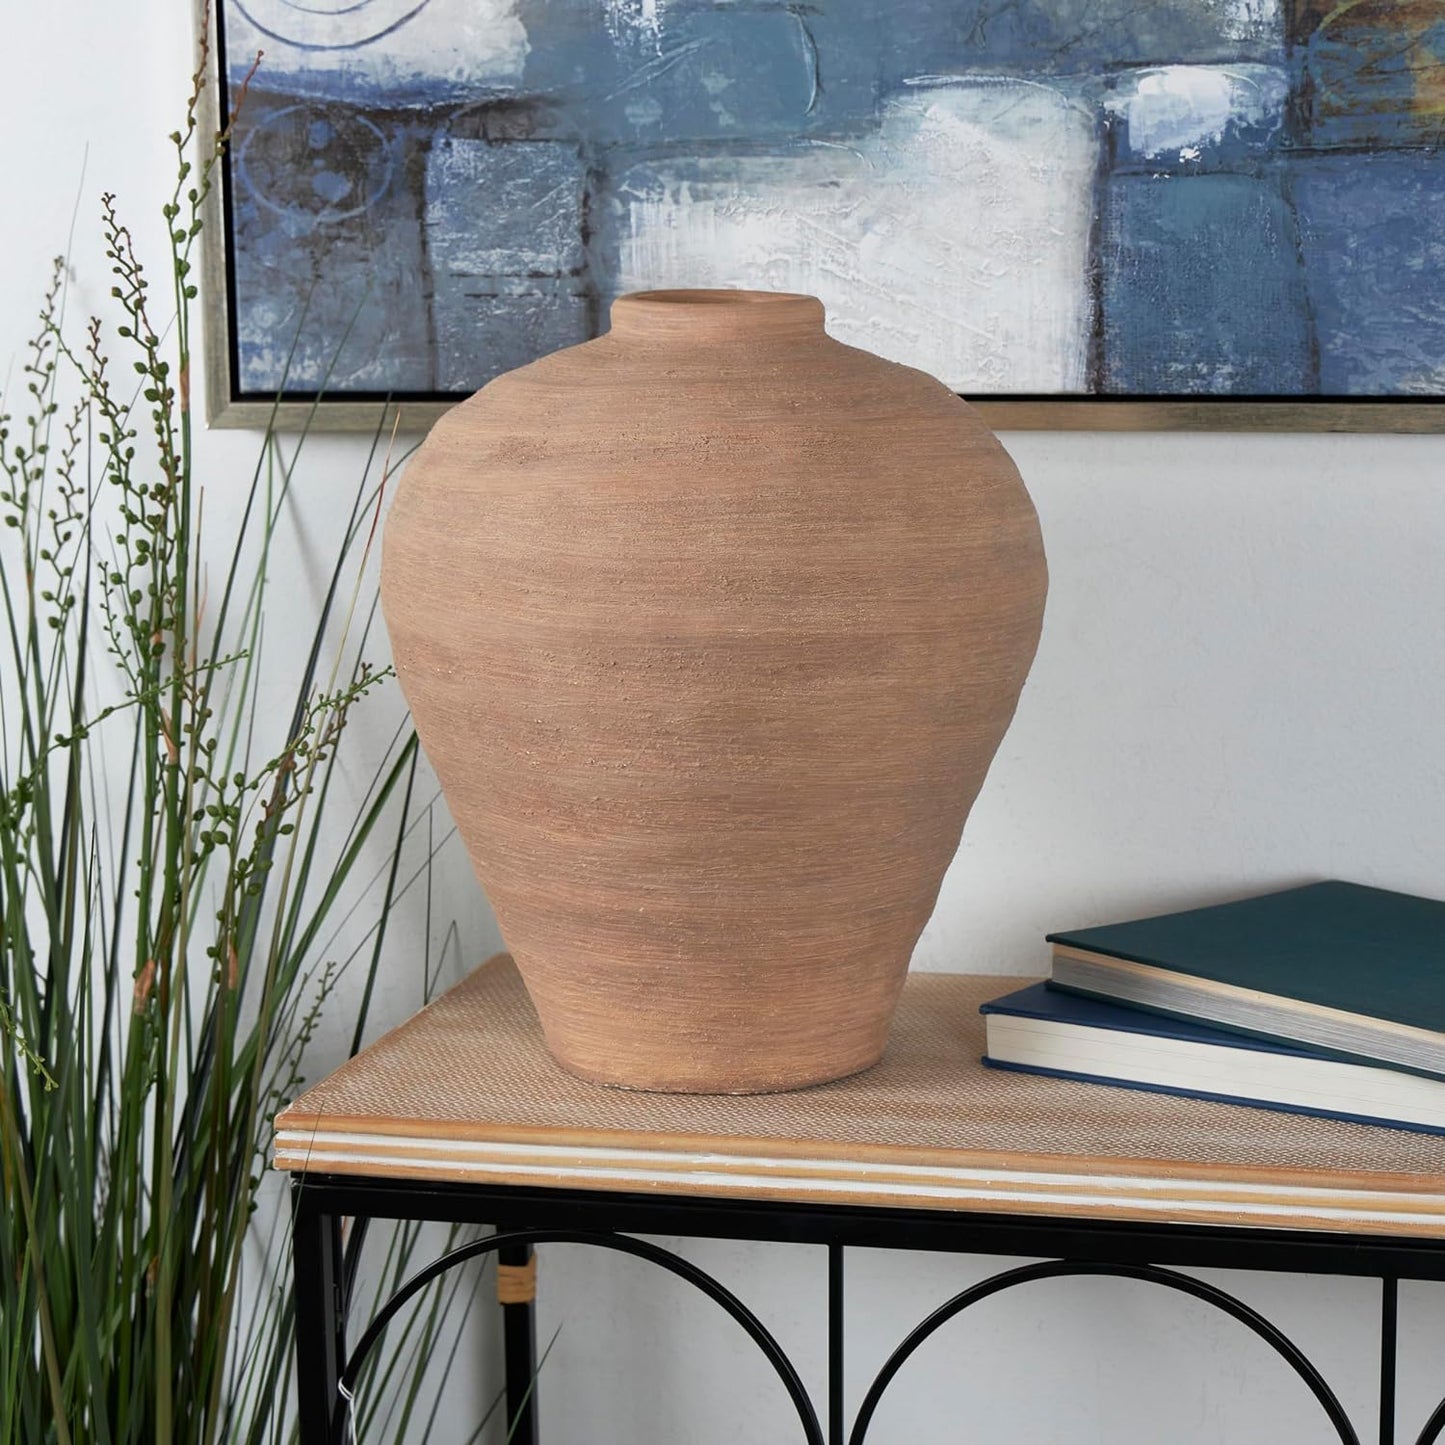 Deco 79 Ceramic Wide Textured Vase, 14" x 13" x 17", Beige